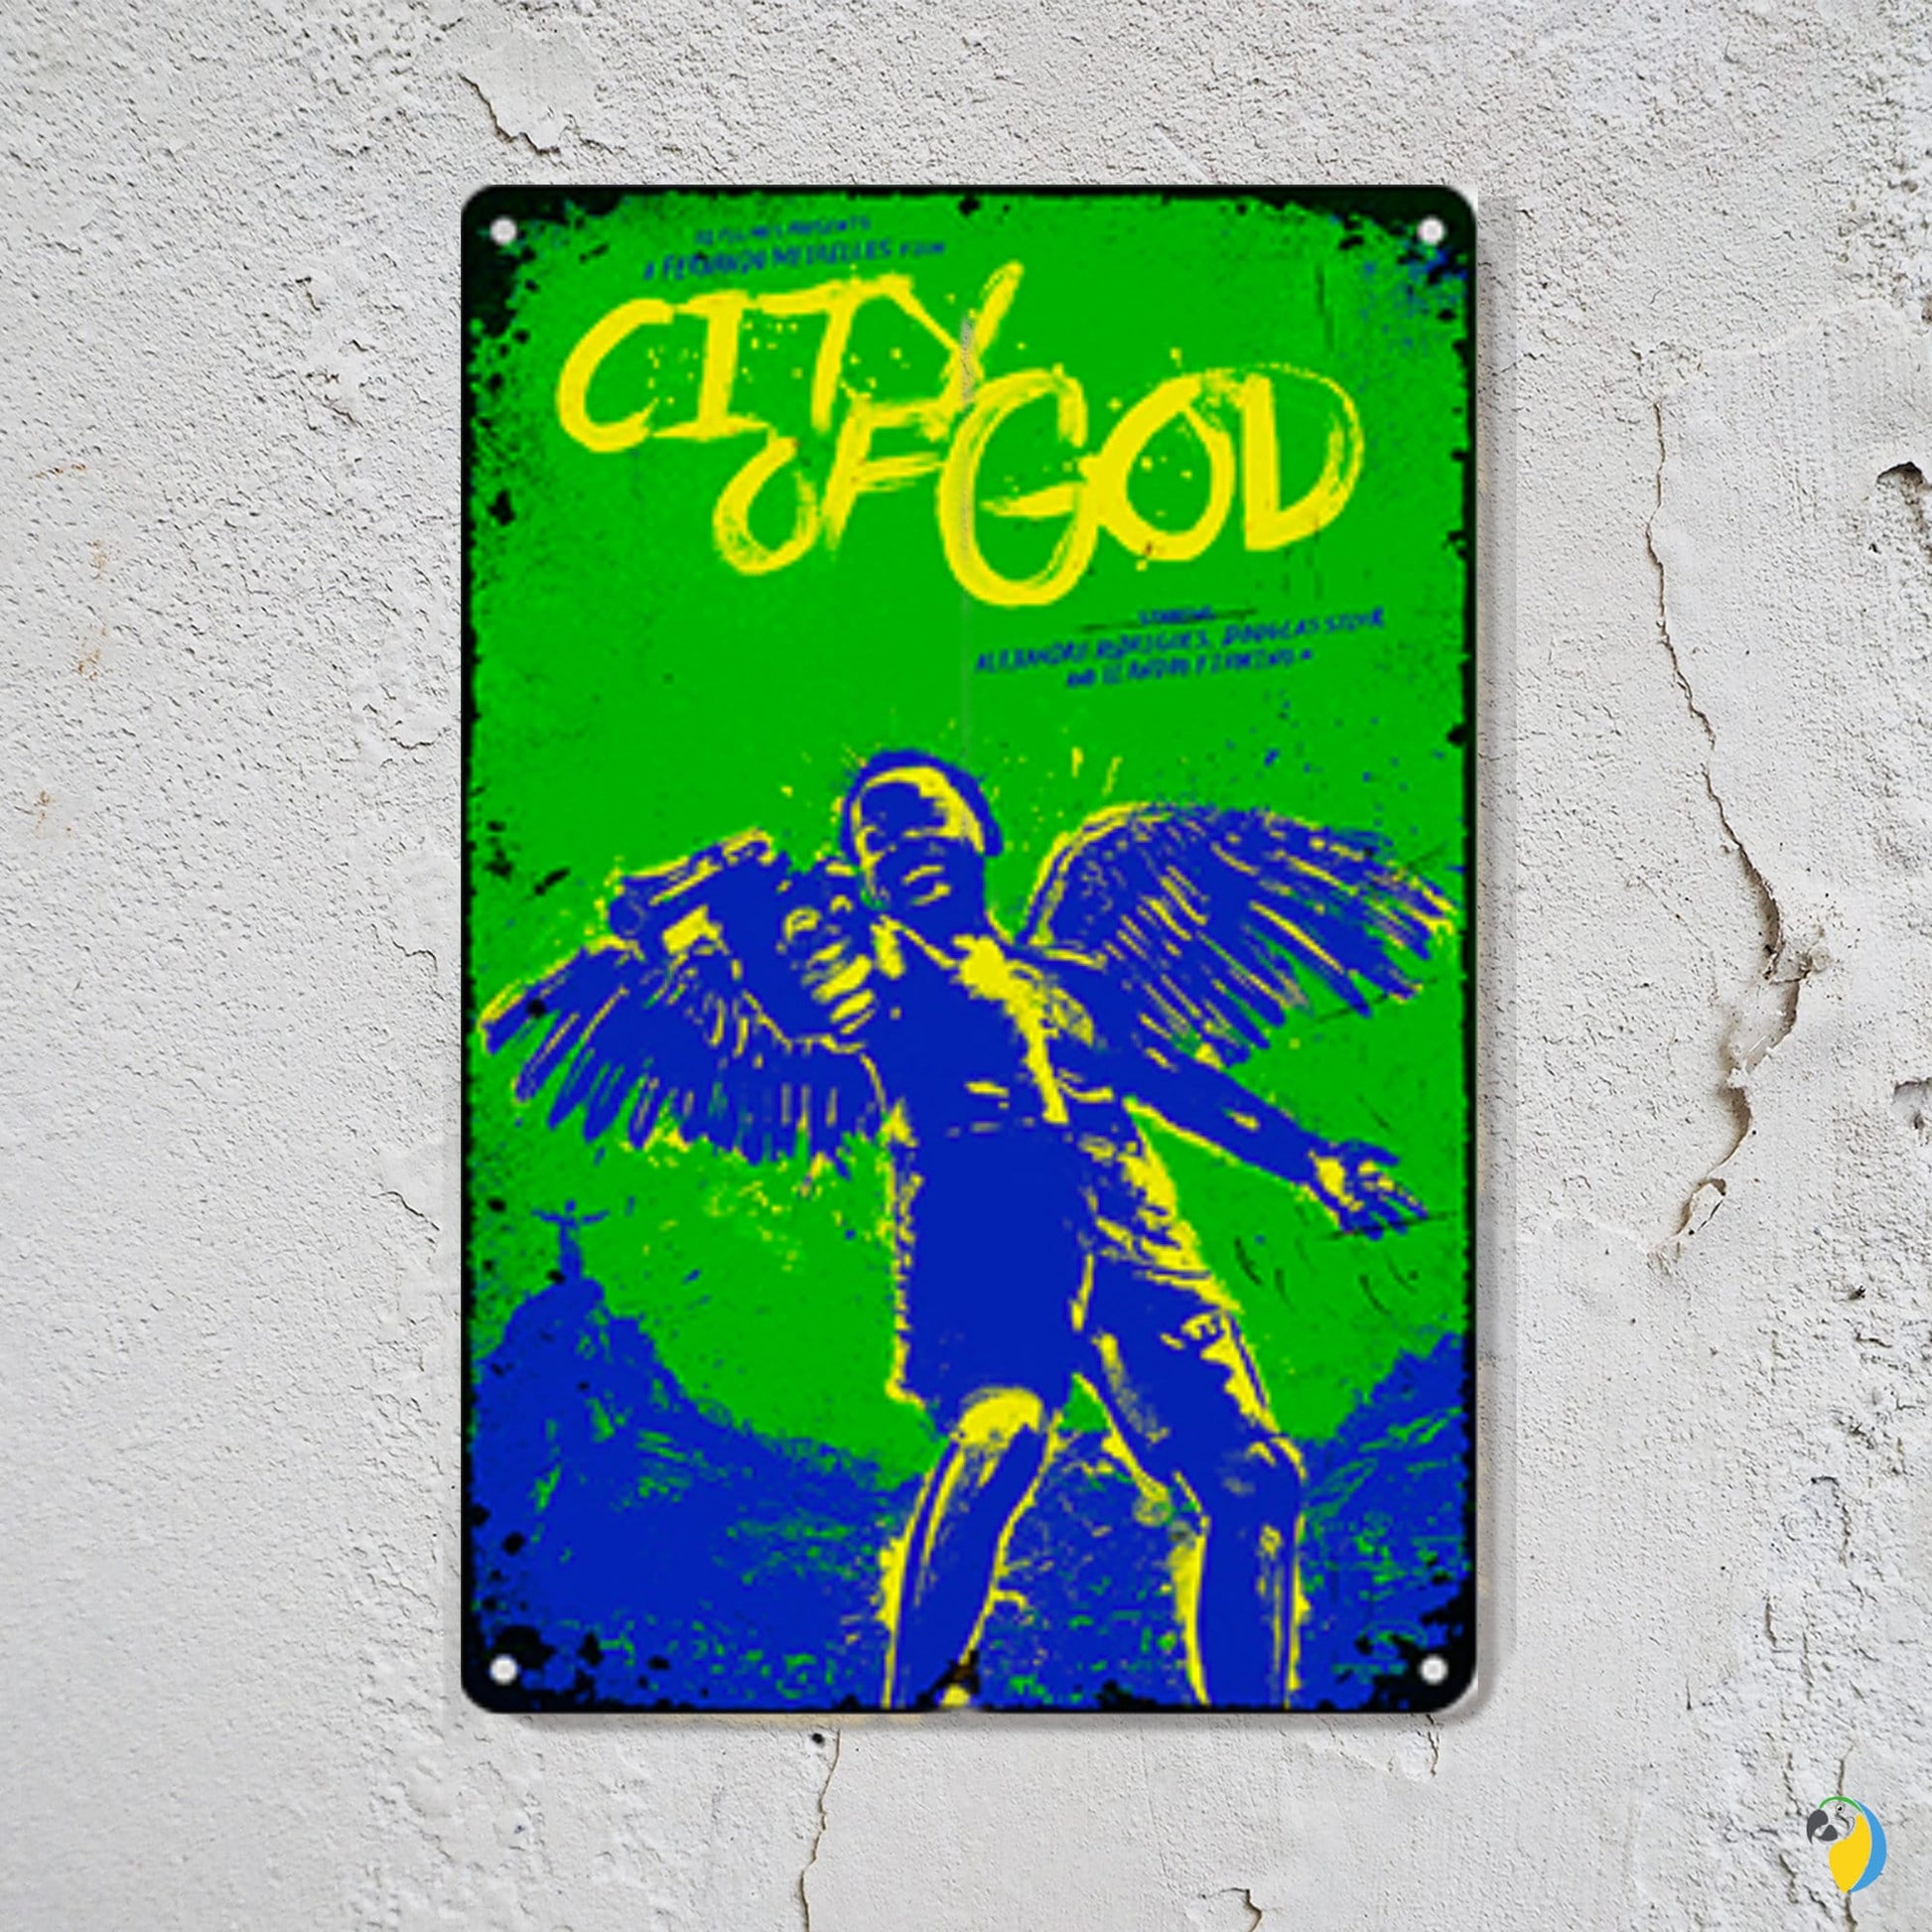 Metal Print Of Brazilian Film Cidade de Deus | Brazil Tin Sign For Indie Movie Fan | City Of God Retro Metal Plaque | Wall Art For TV Room Bar Decor | Papagaio Studio Etsy Shop